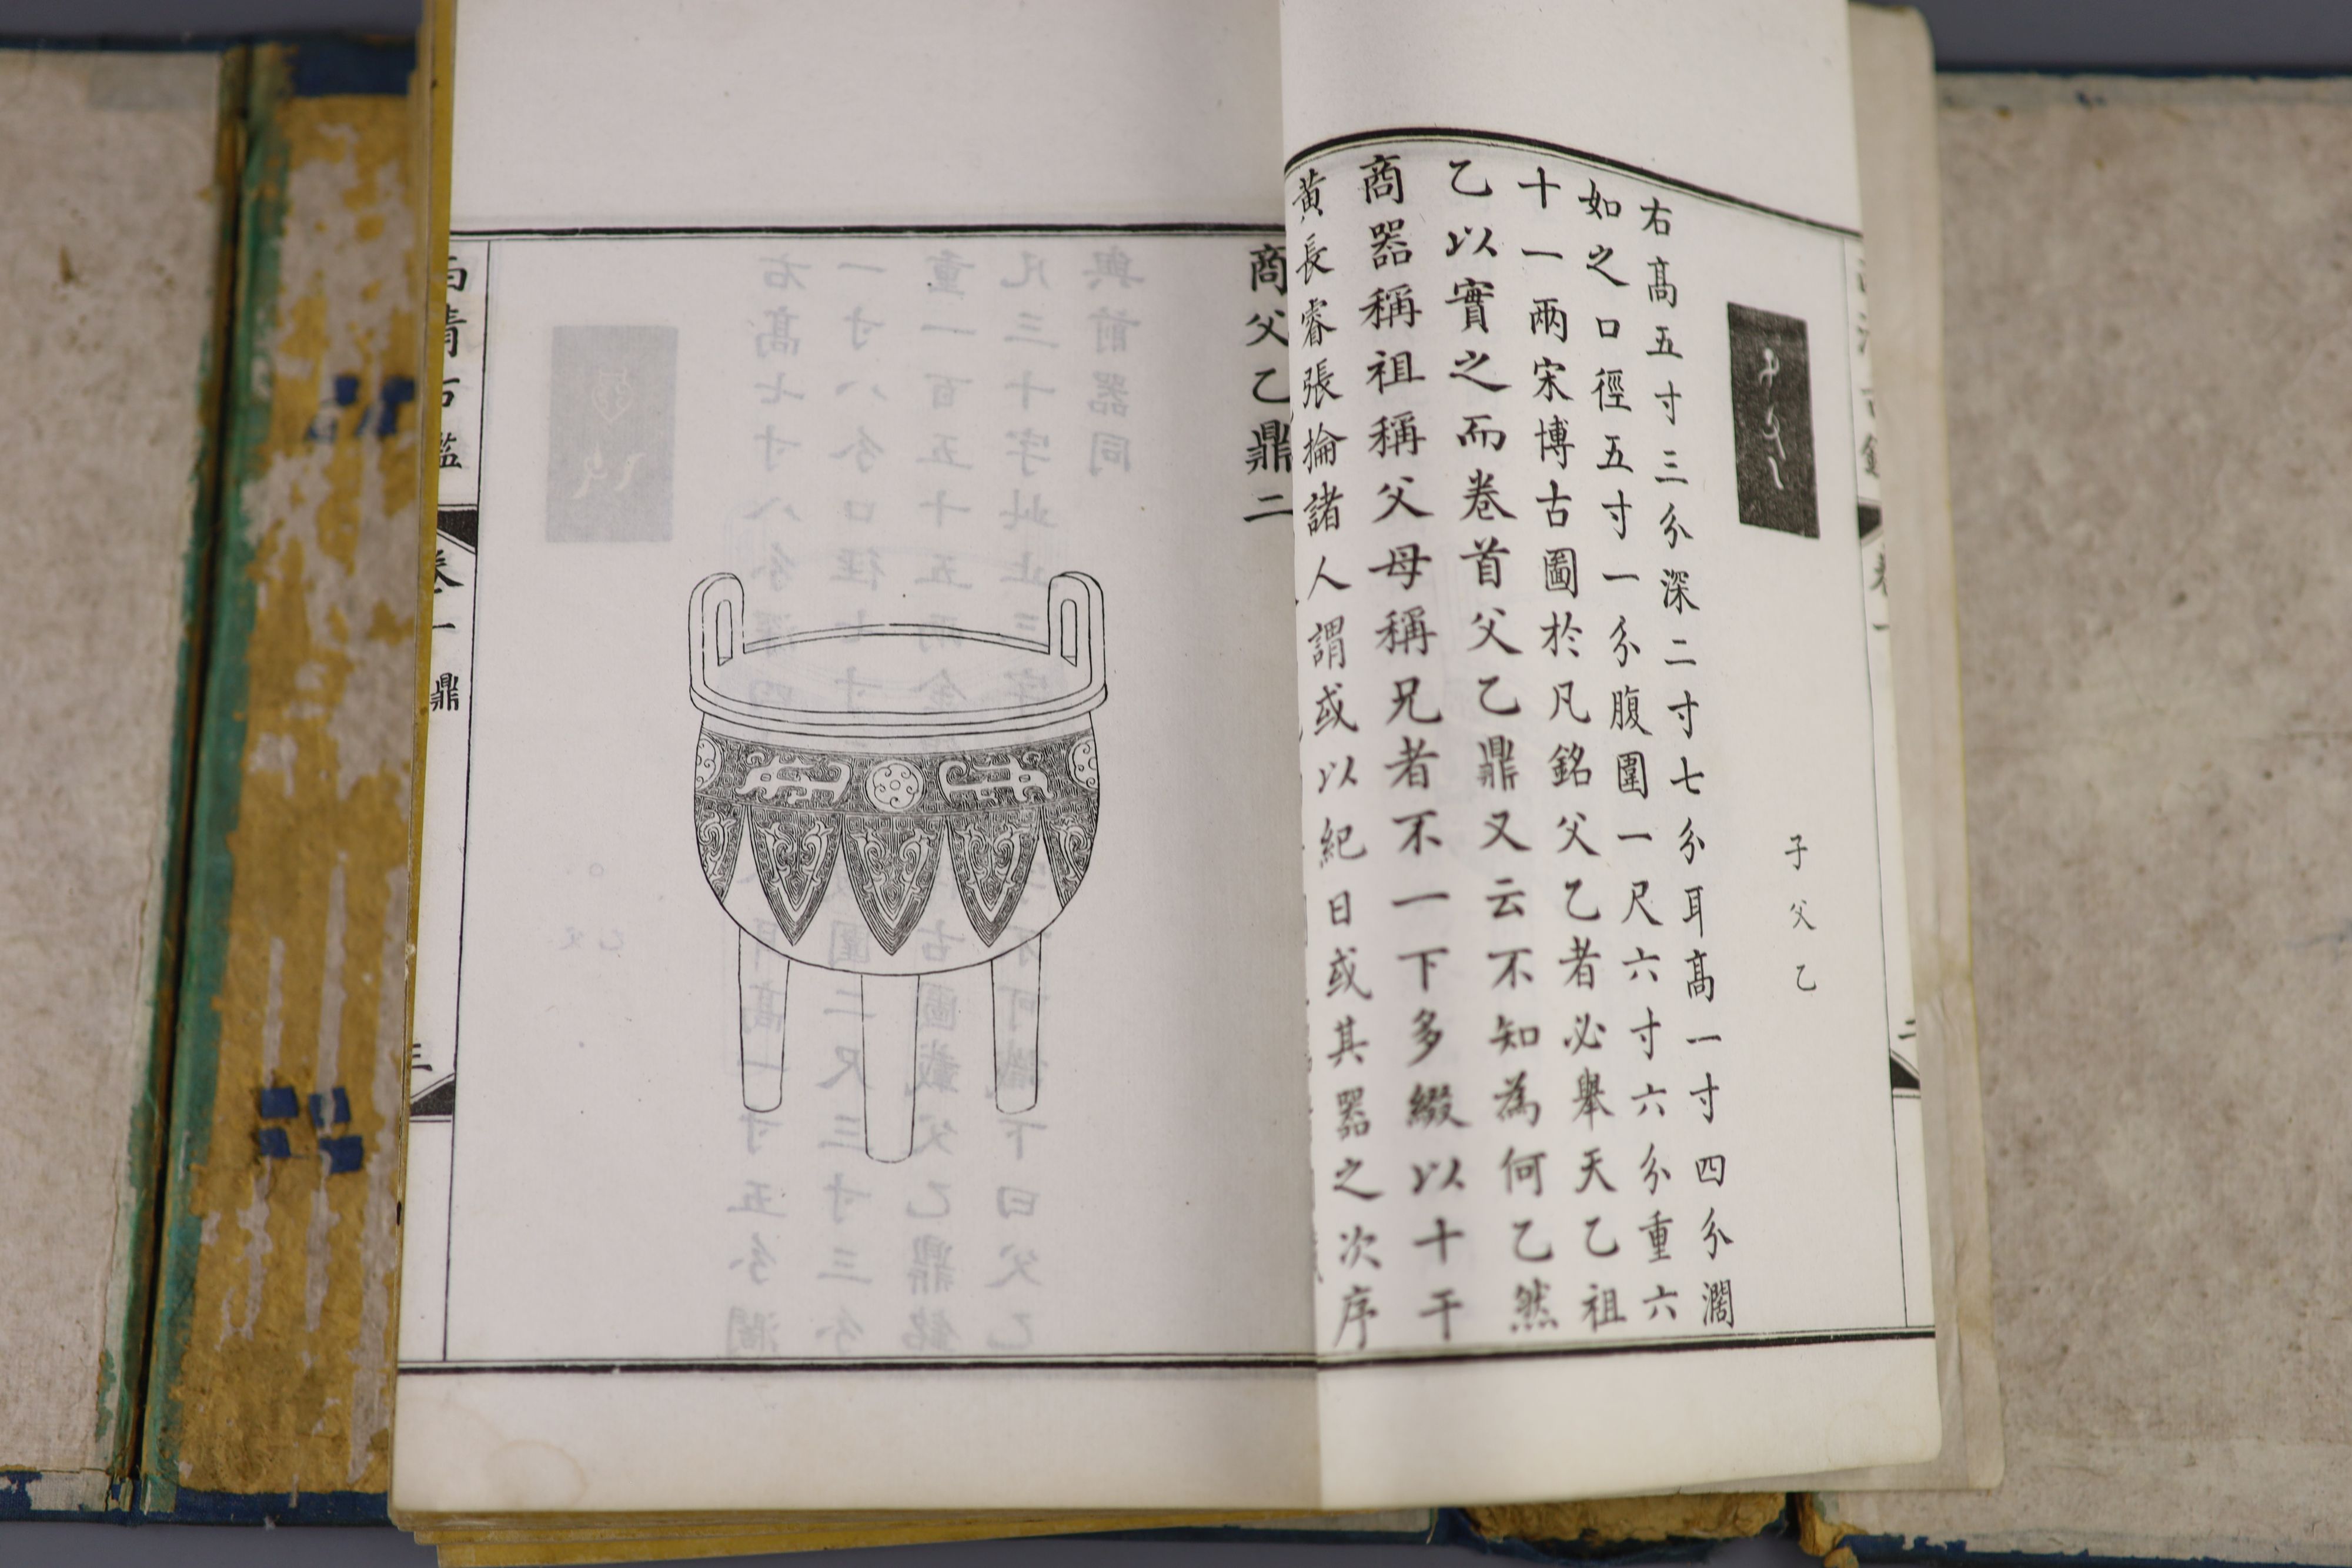 Rare Chinese book, Qinding Xiqing gujian. [Catalogue of the Xiqing antiquities], published 14th year of the reign of Qianlong 1749, Pro